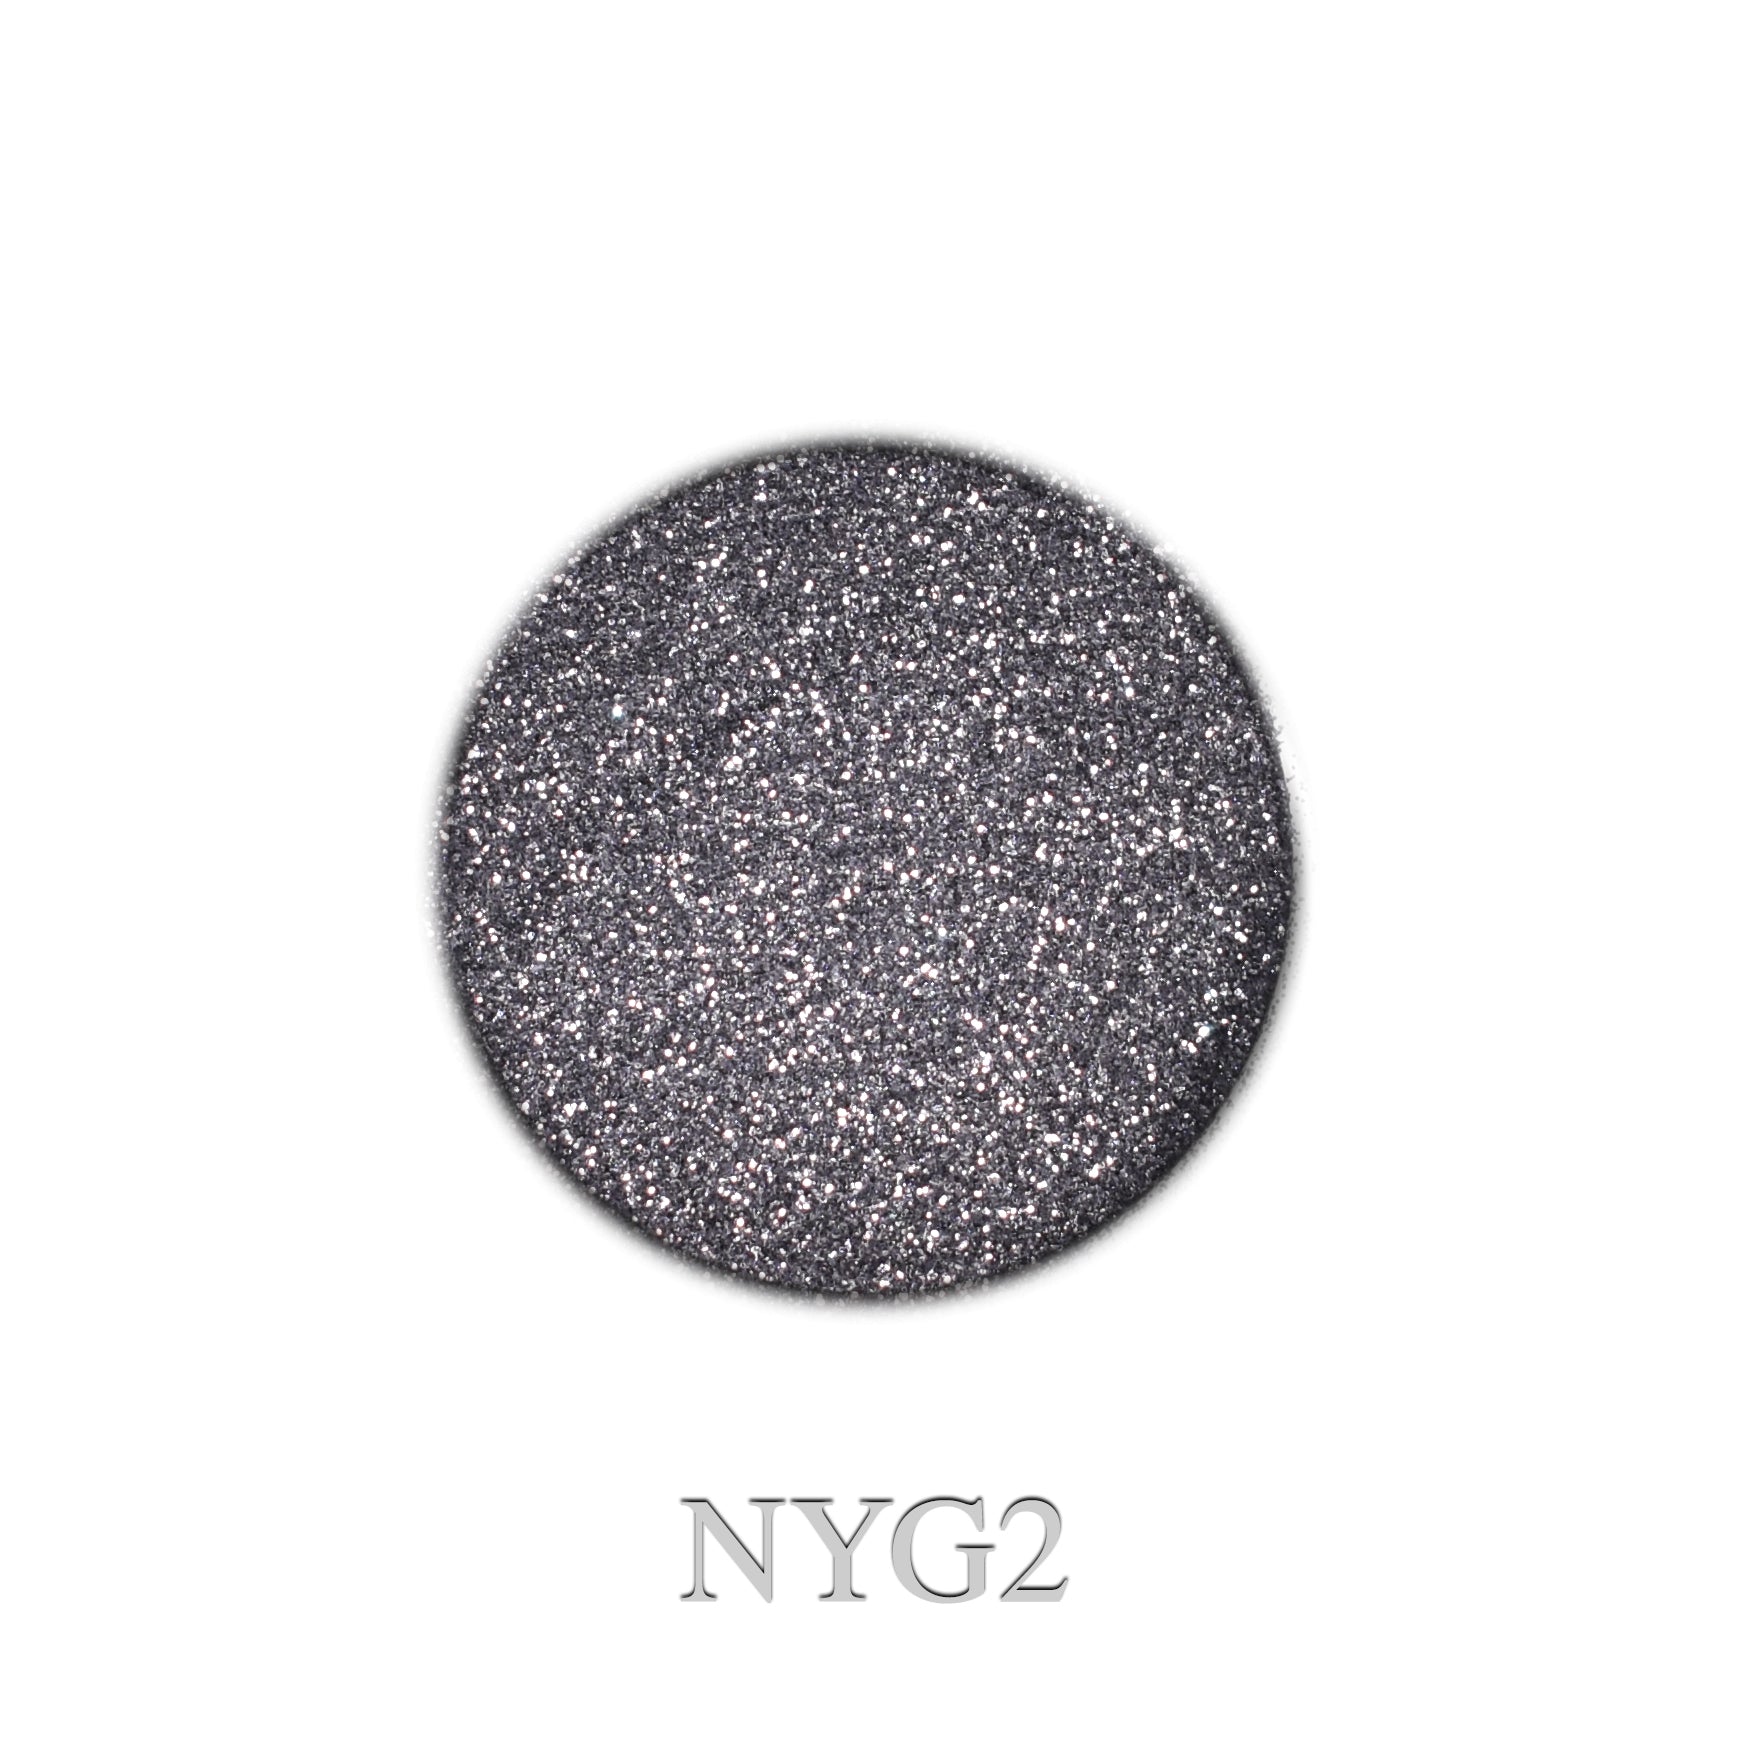 New Yorker Glitter NYG2